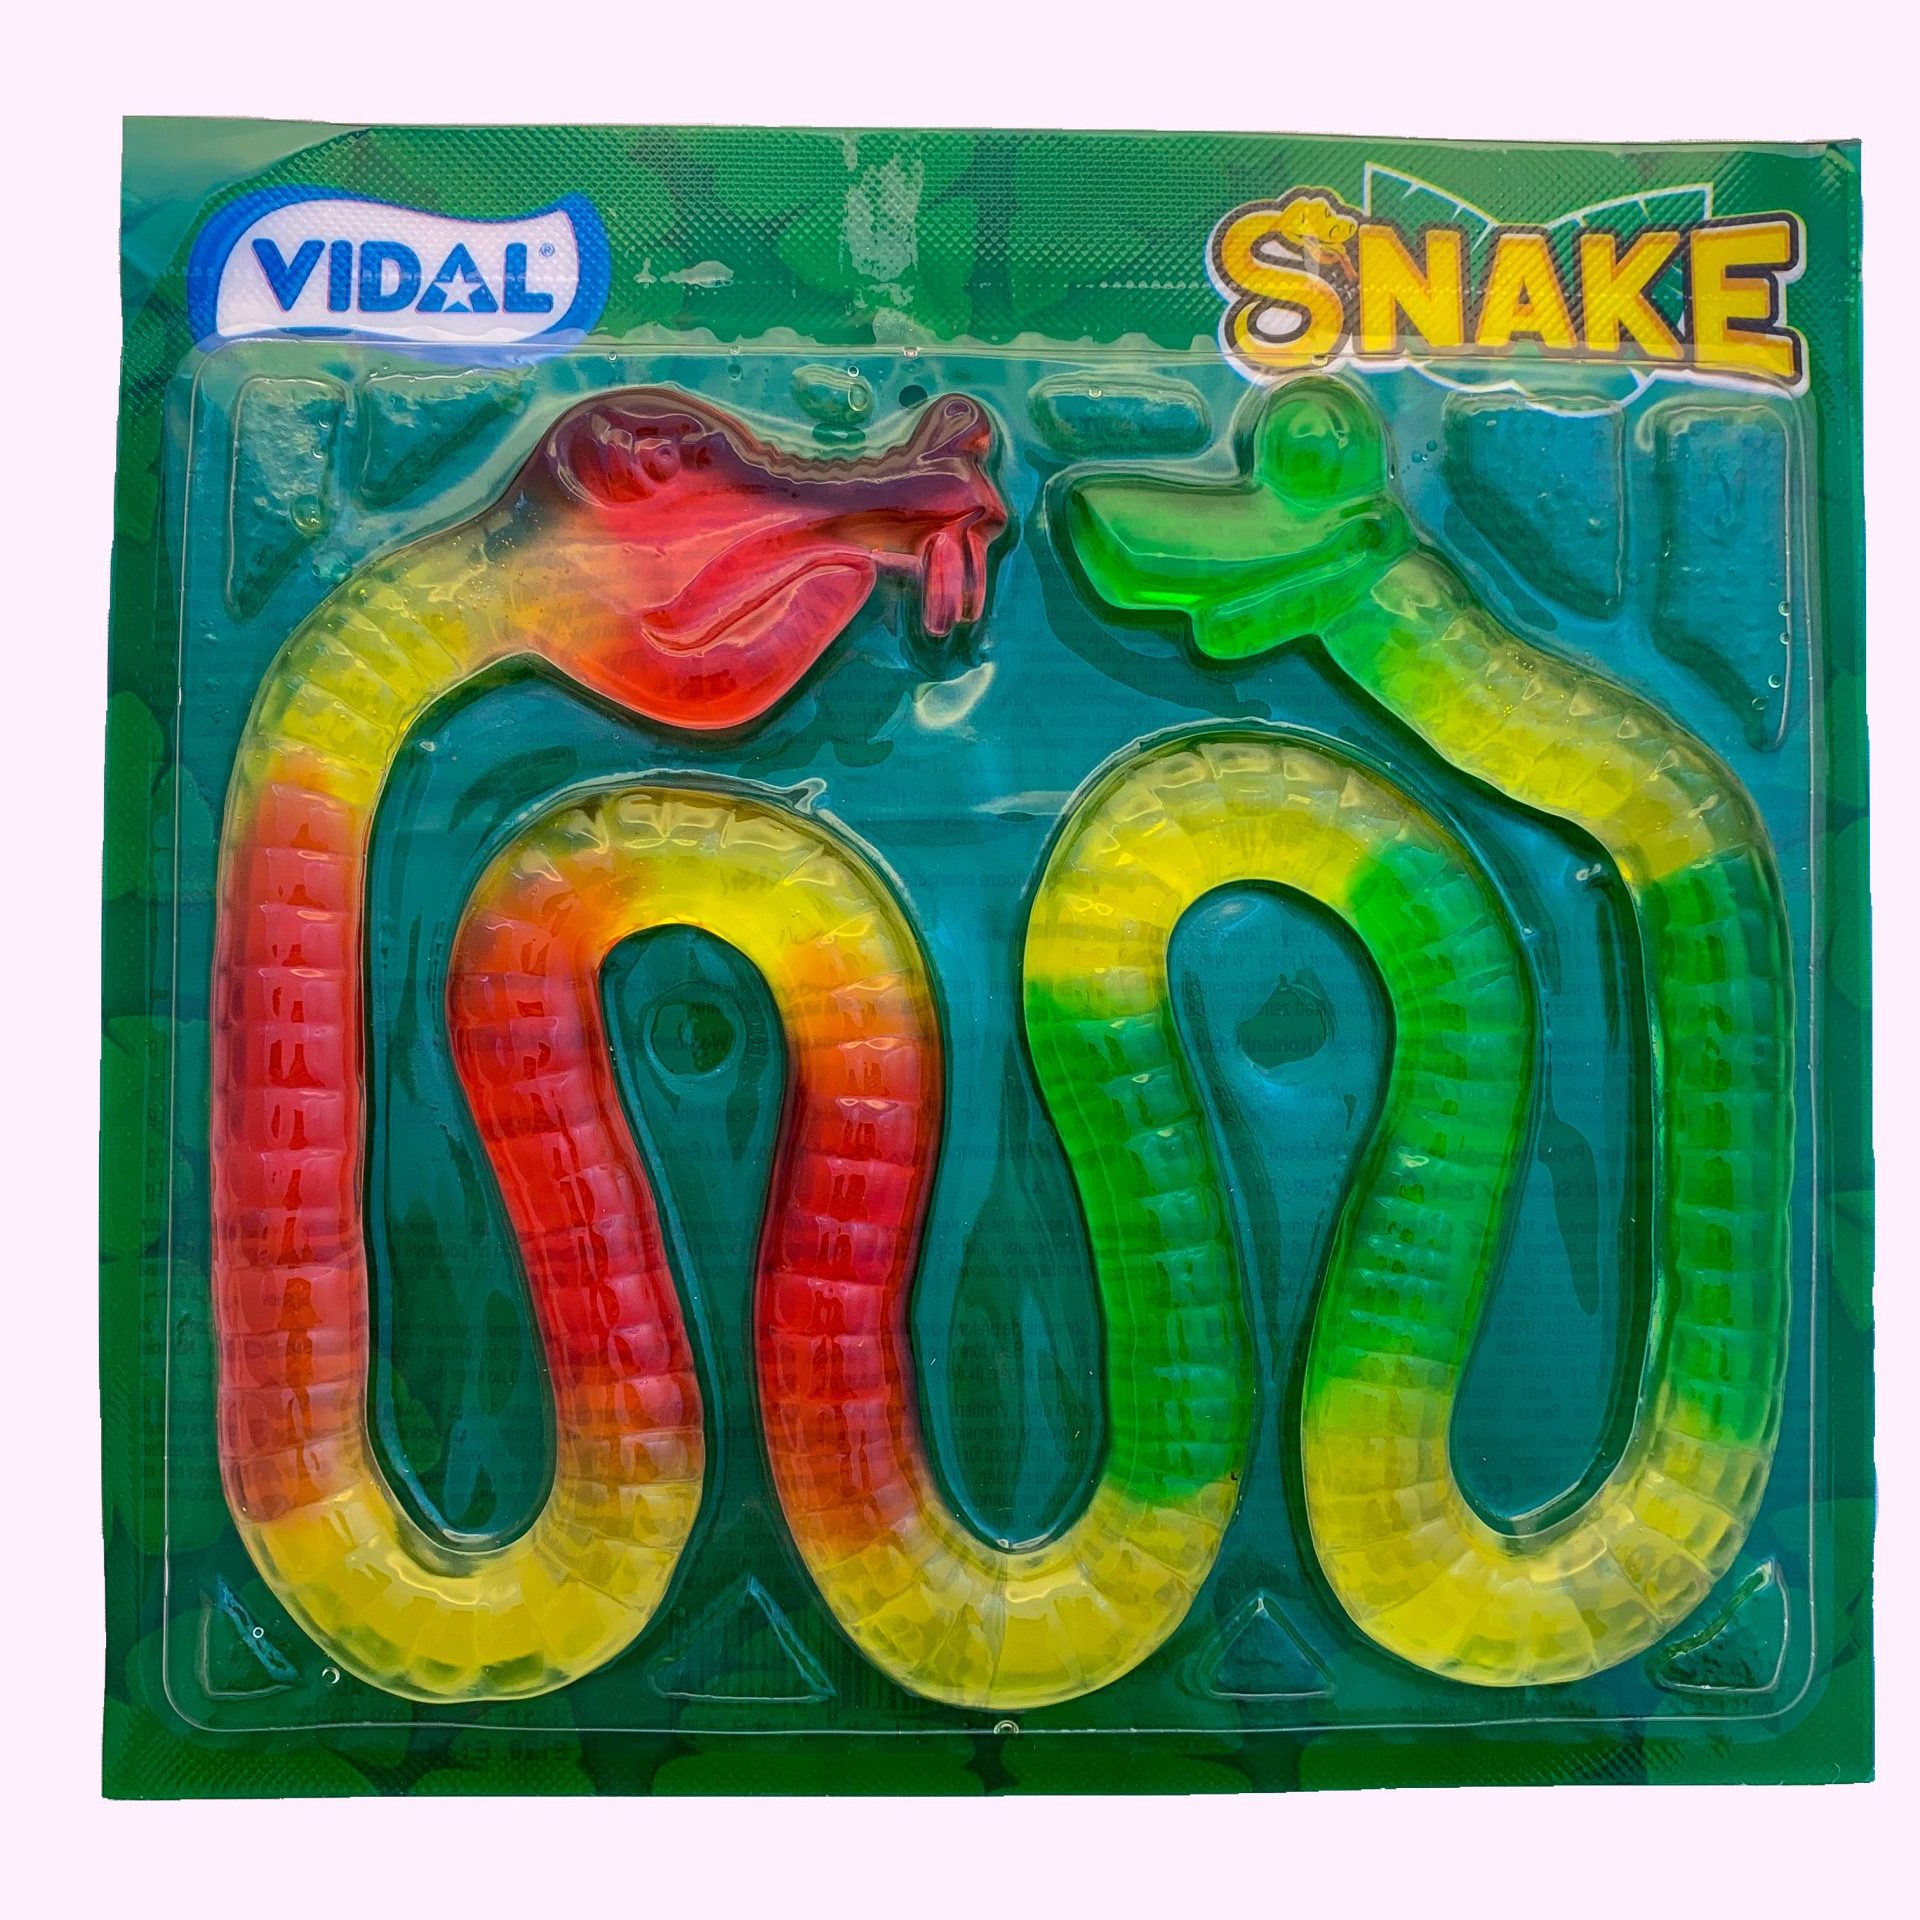 Vidal SNAKE Jelly serpent geant